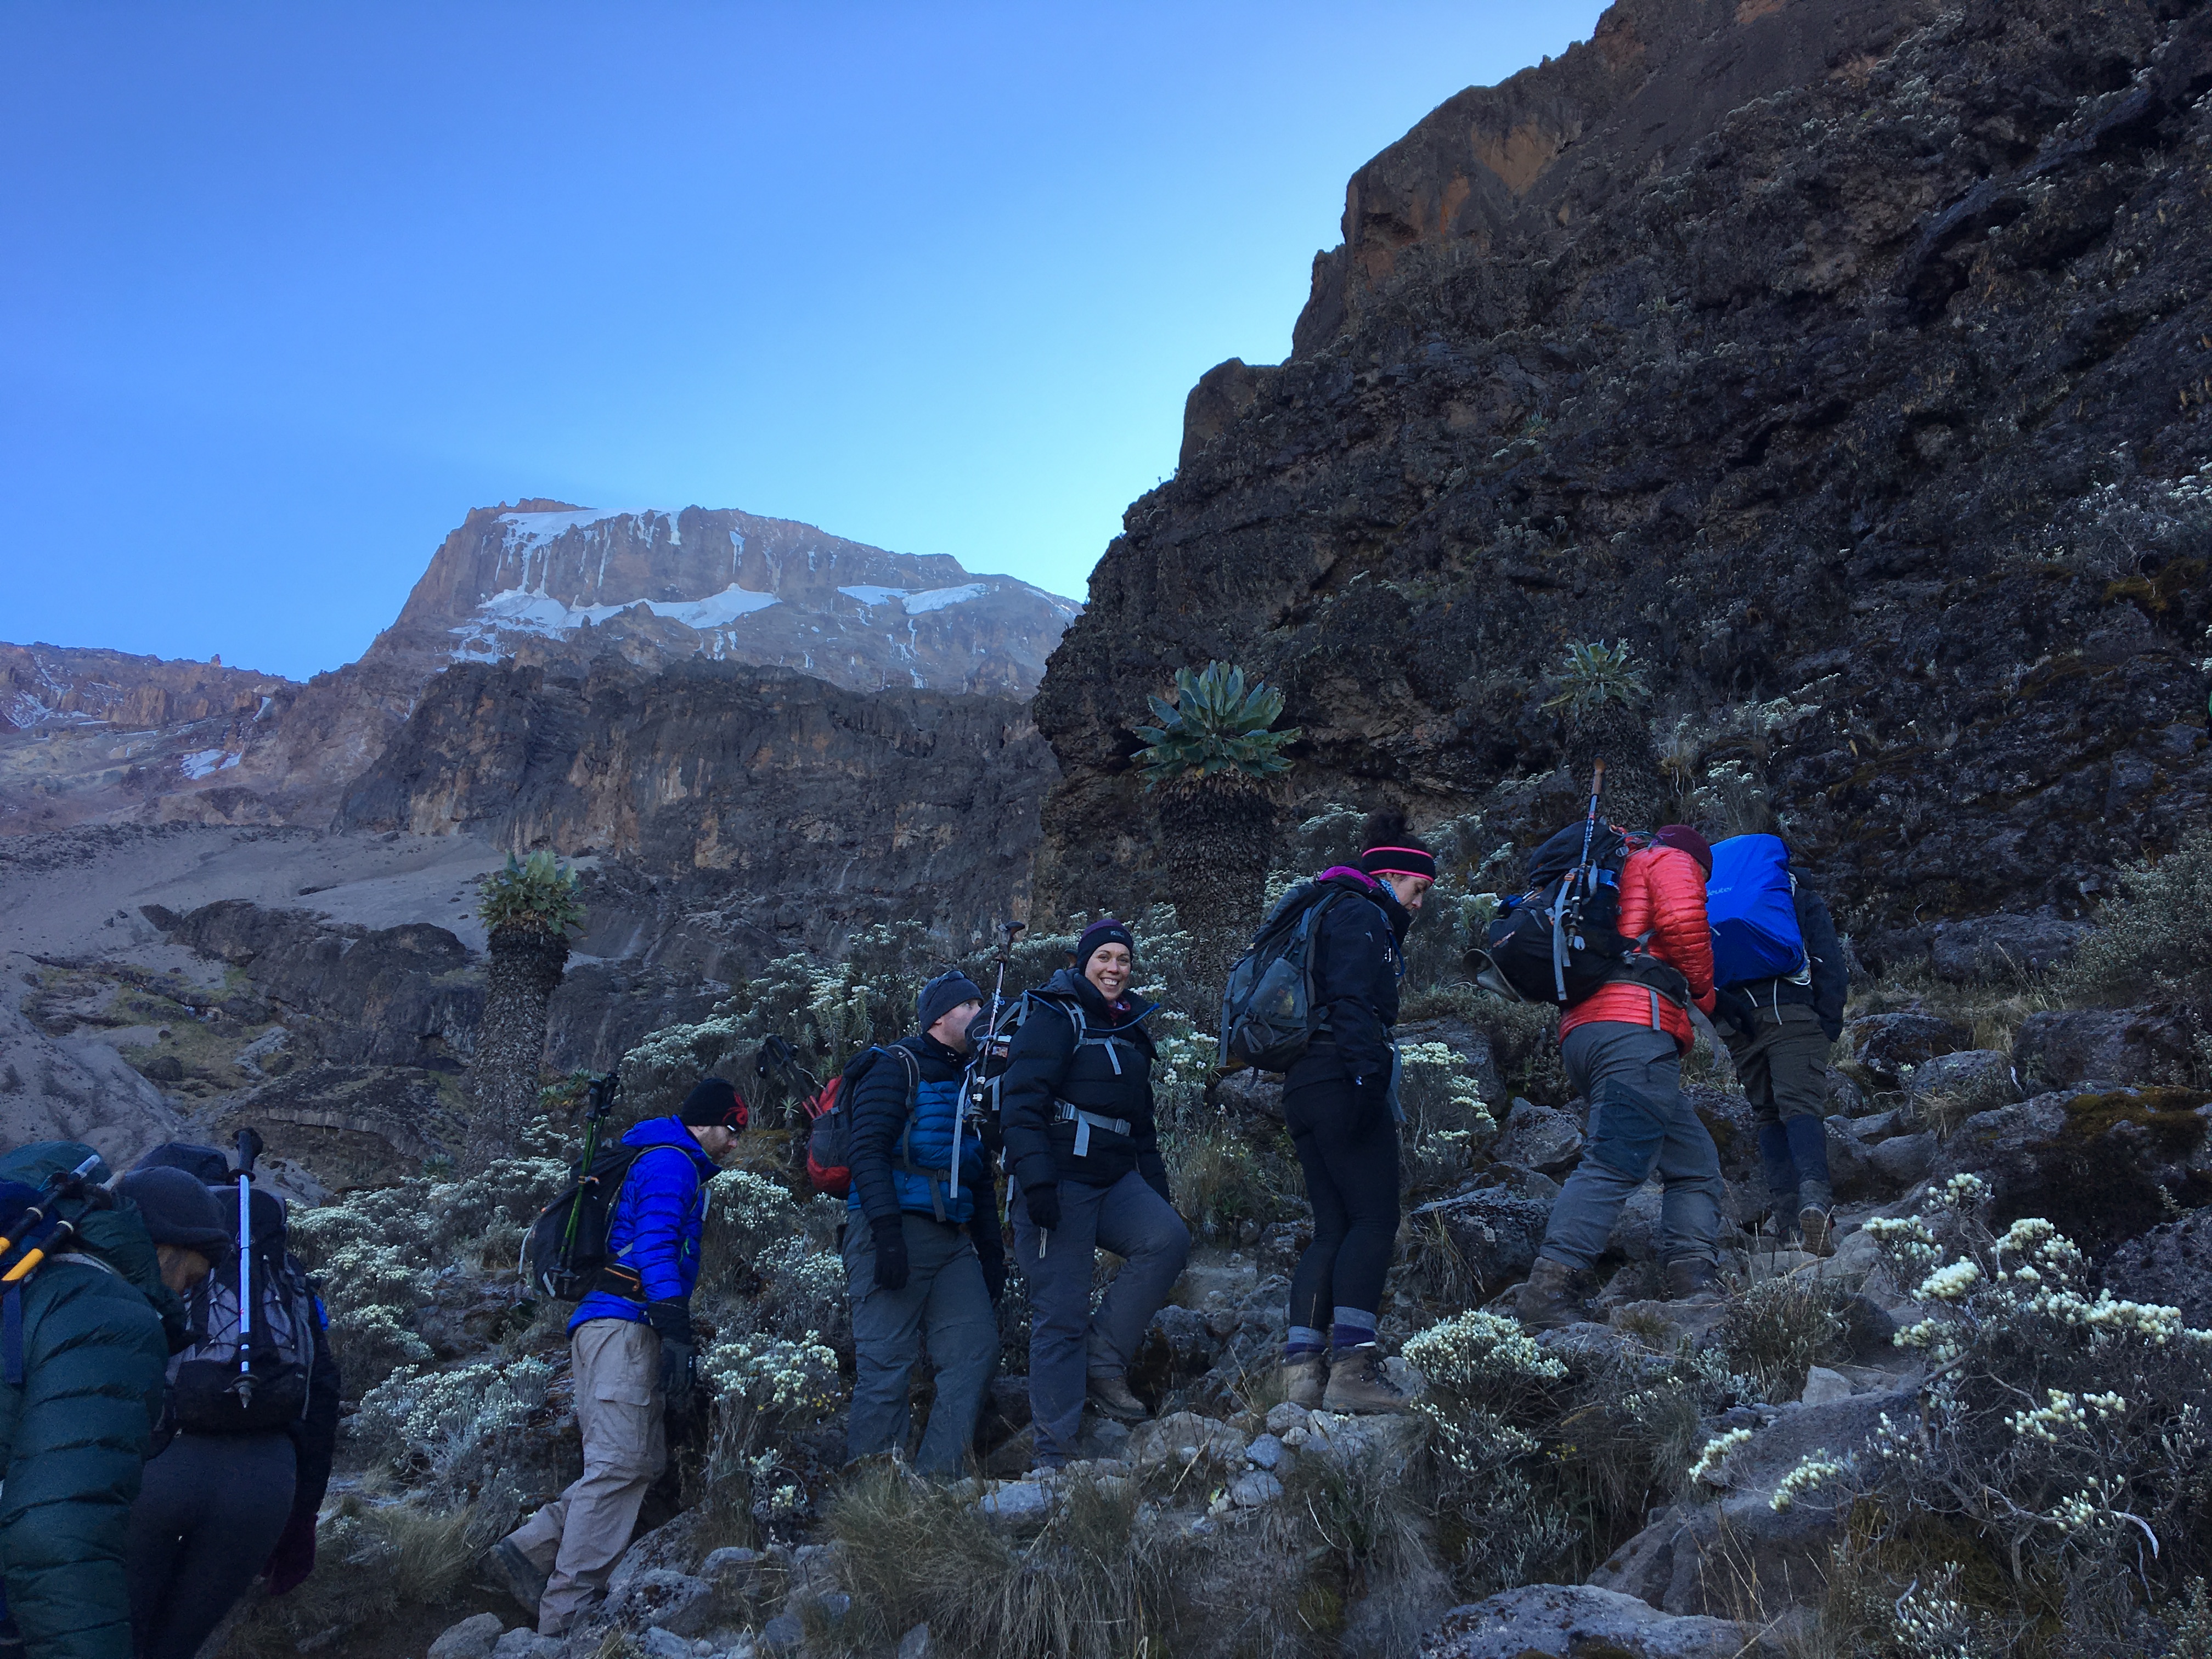 Heading up the Barranco Wall on Kilimanjaro